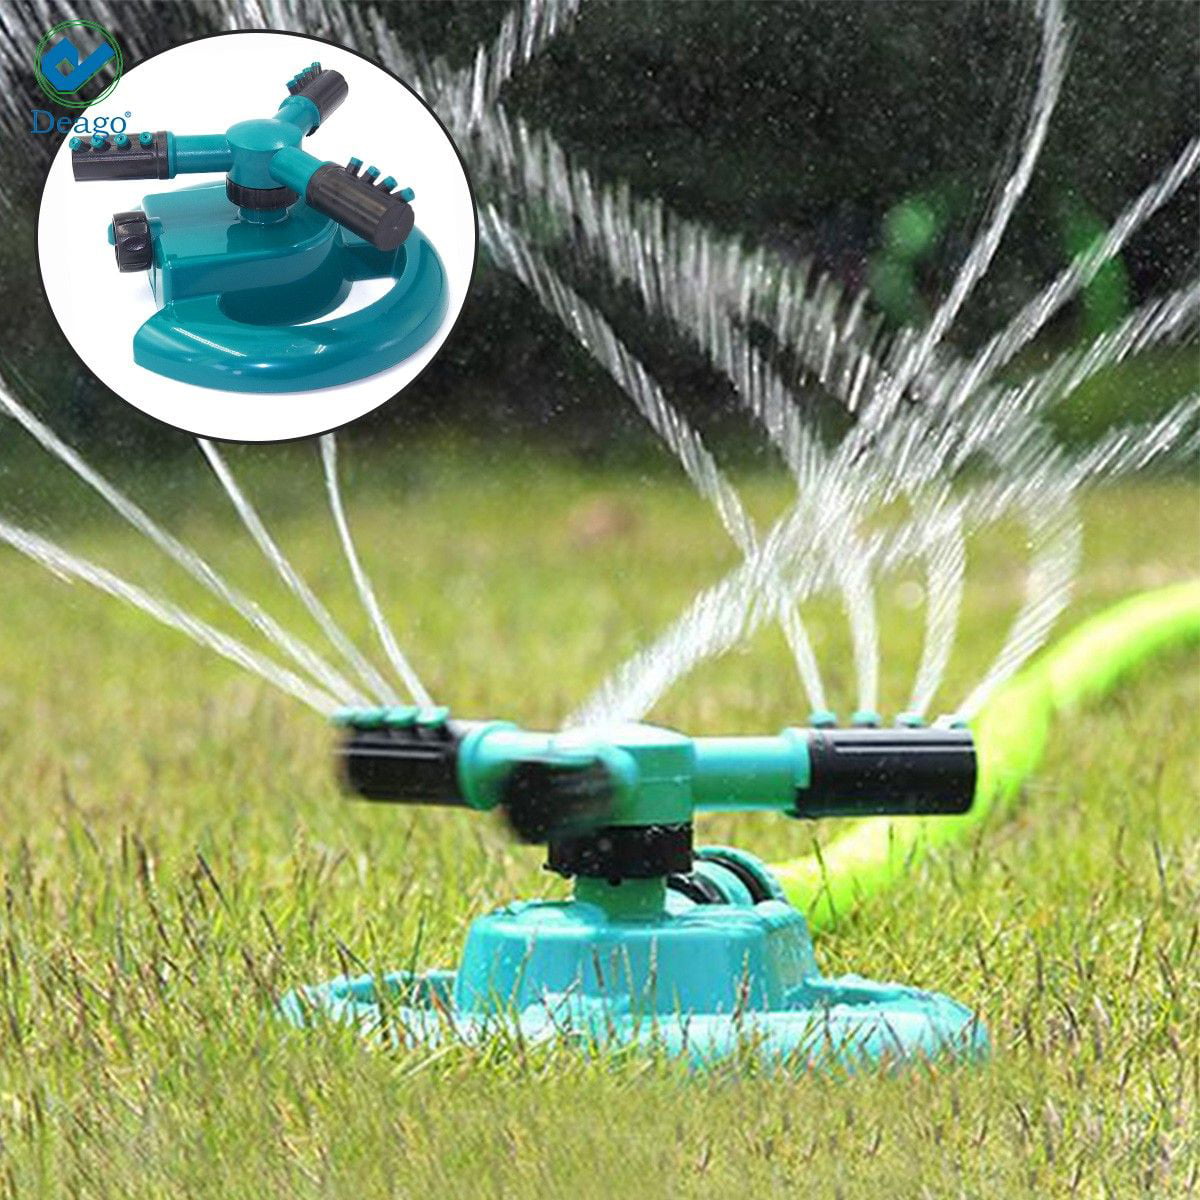 Deago Lawn Sprinkler Automatic Garden Water Irrigation Sprinklers